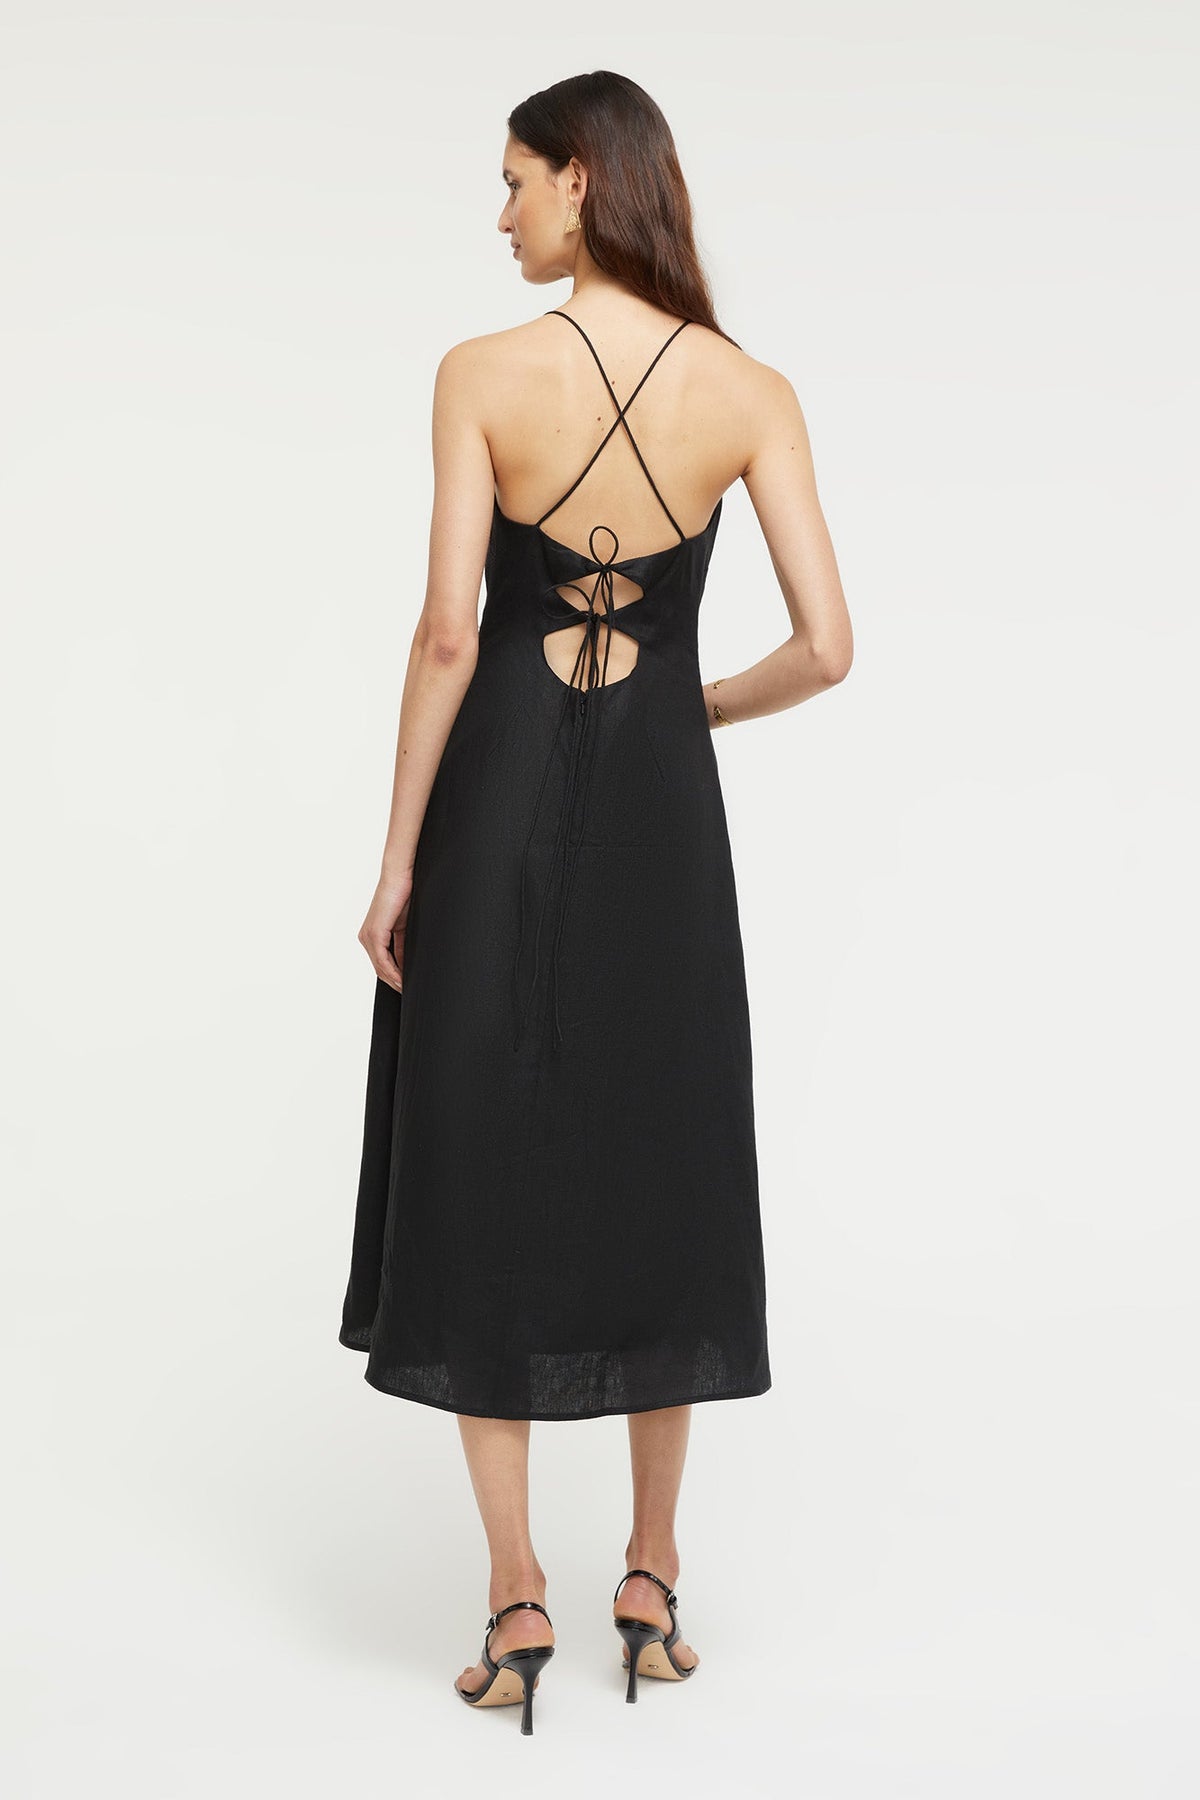 GINIA Frankie Flare Dress in Black 100% Linen